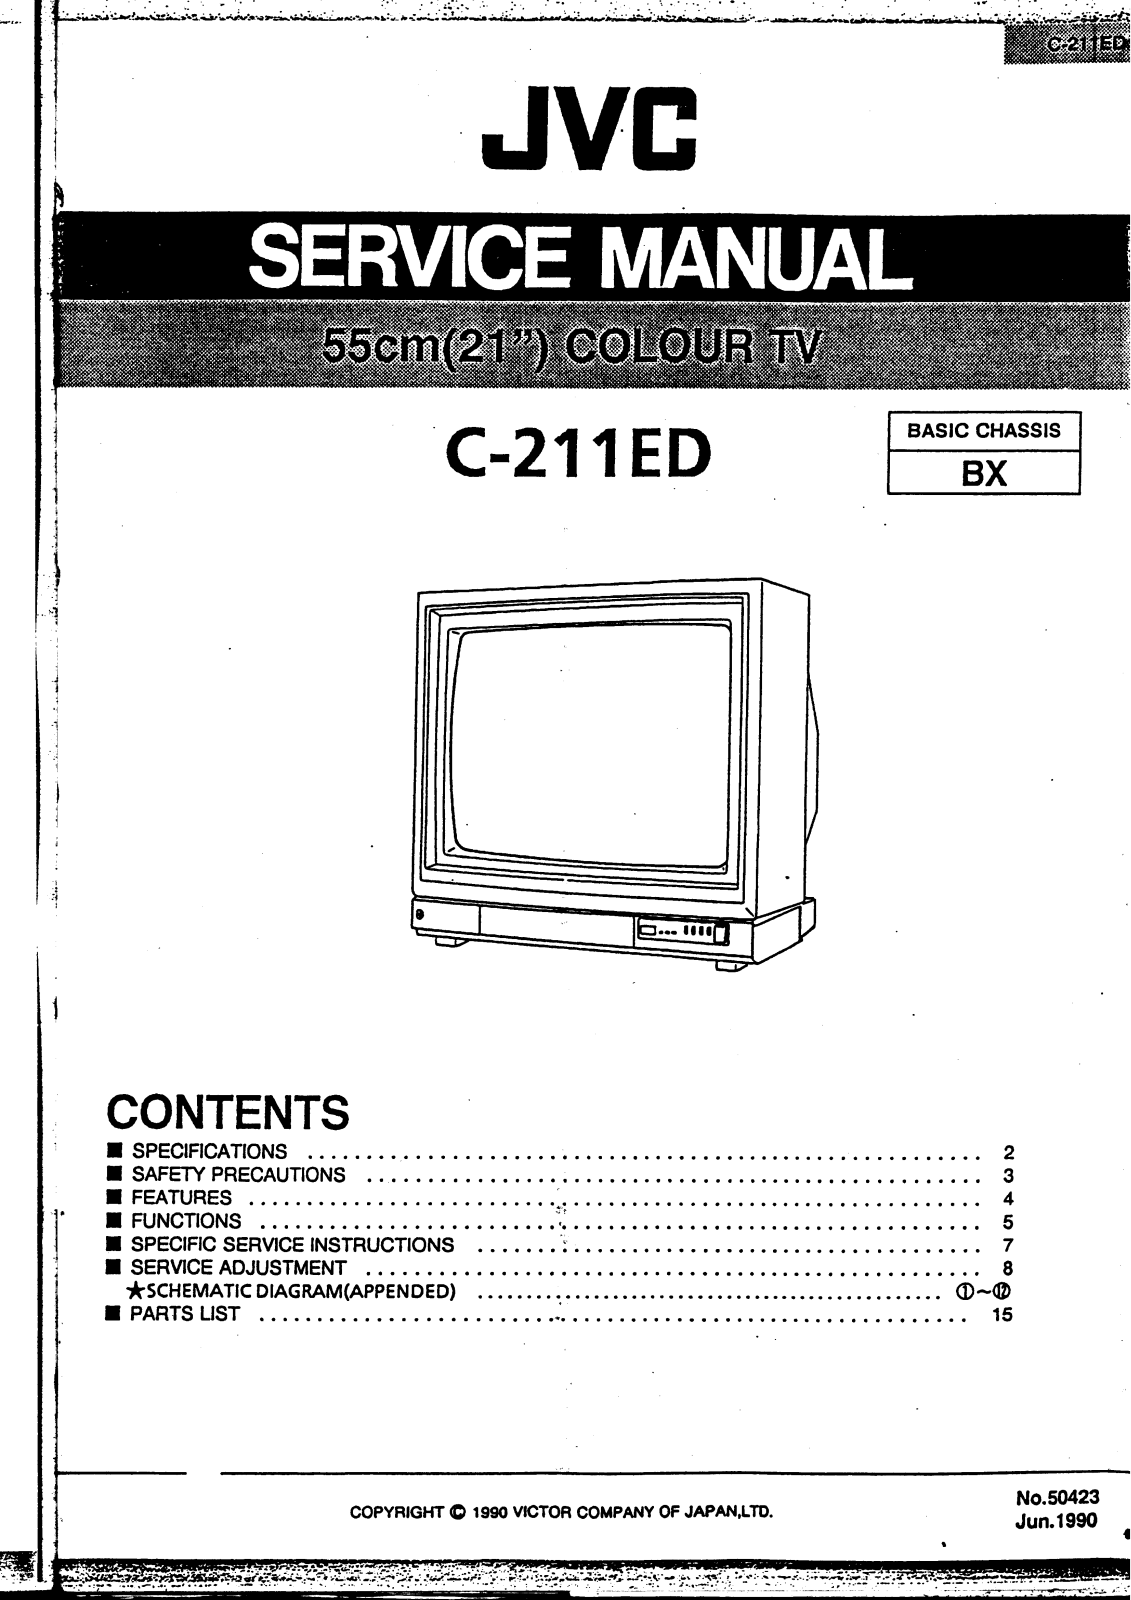 JVC C-211ED Service Manual